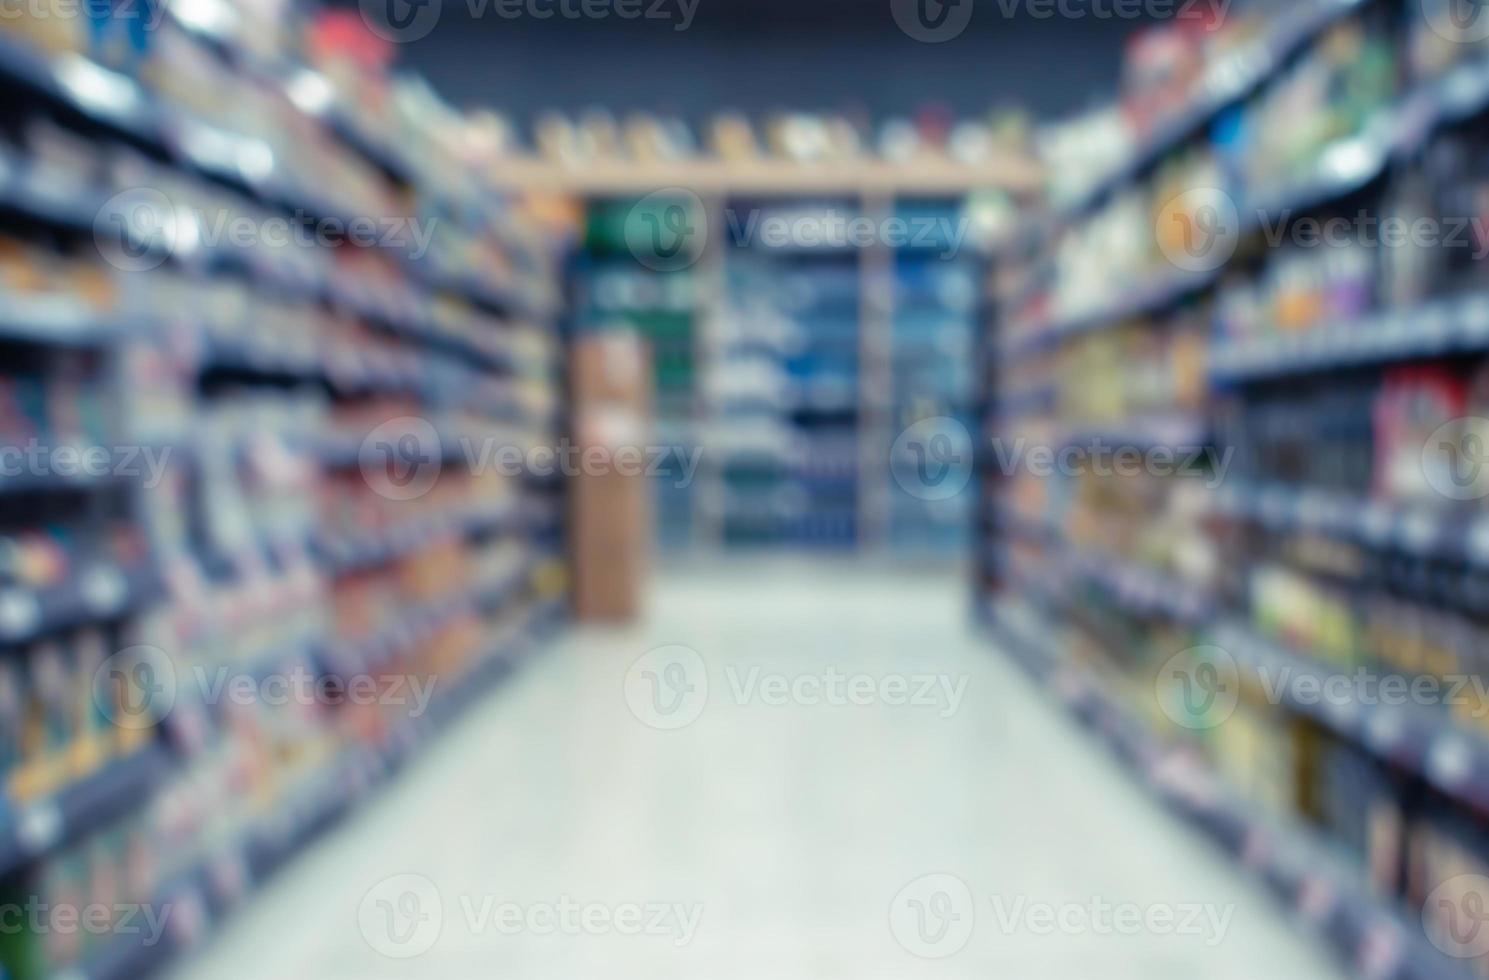 abstrato turva interior de supermercado ou loja de varejo para plano de fundo foto